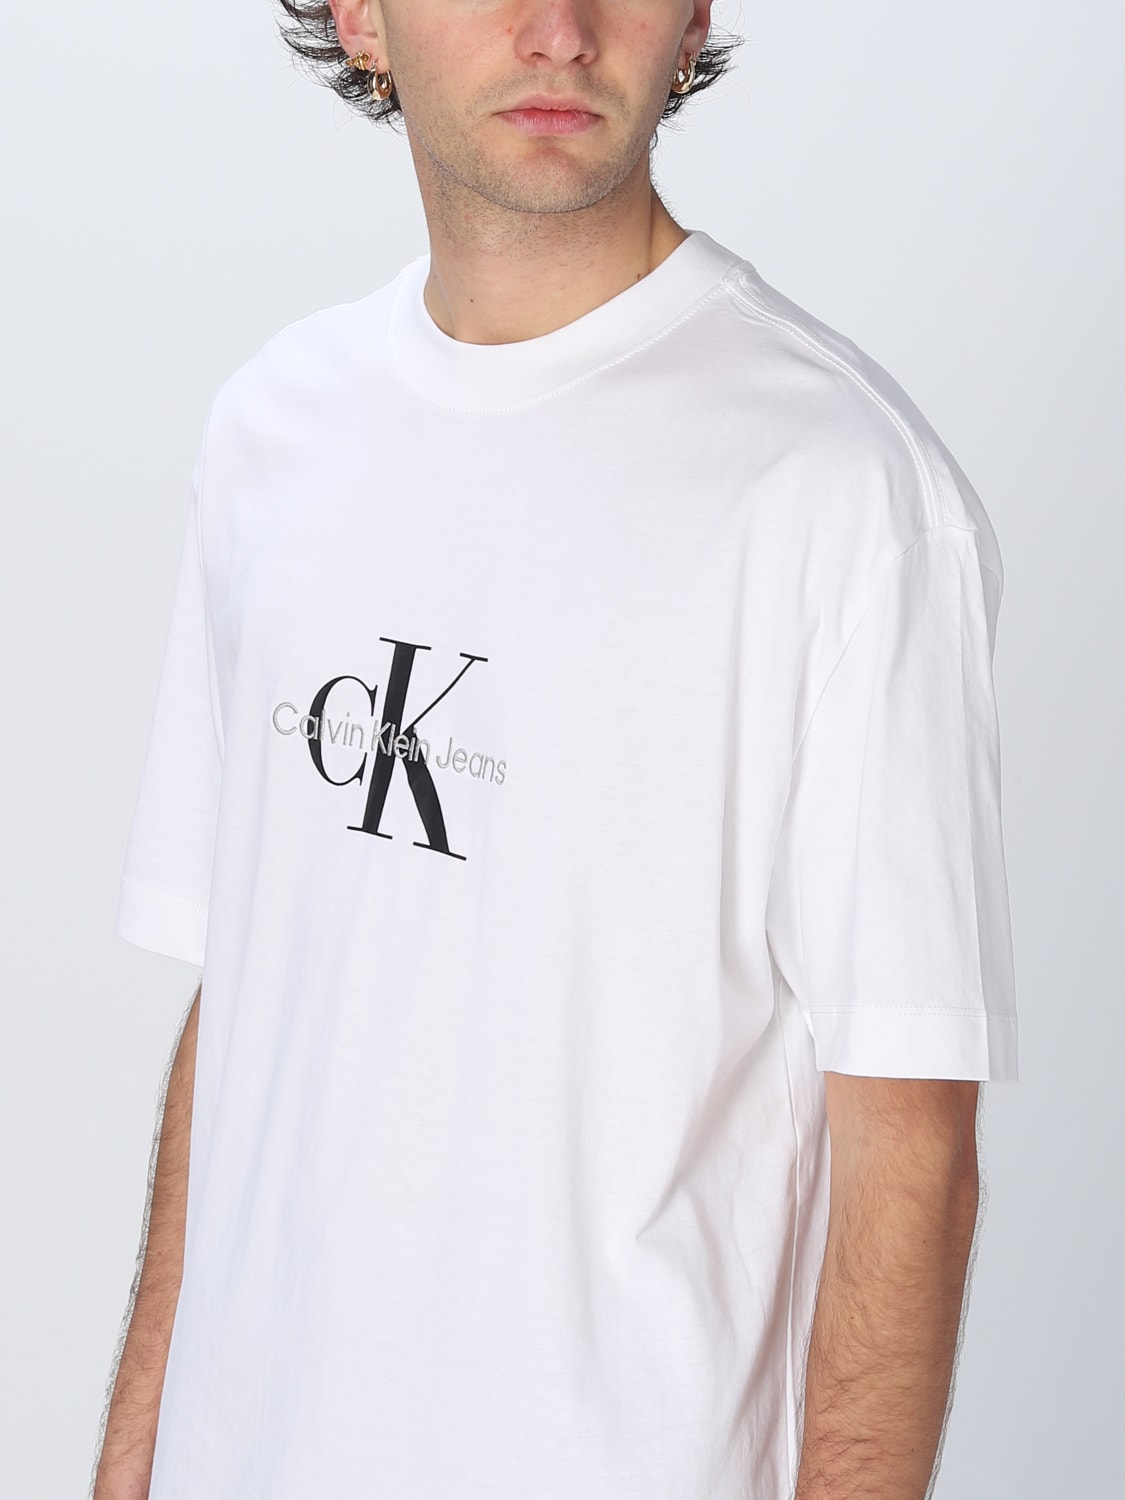 CALVIN KLEIN JEANS：Tシャツ メンズ - ホワイト | GIGLIO.COM